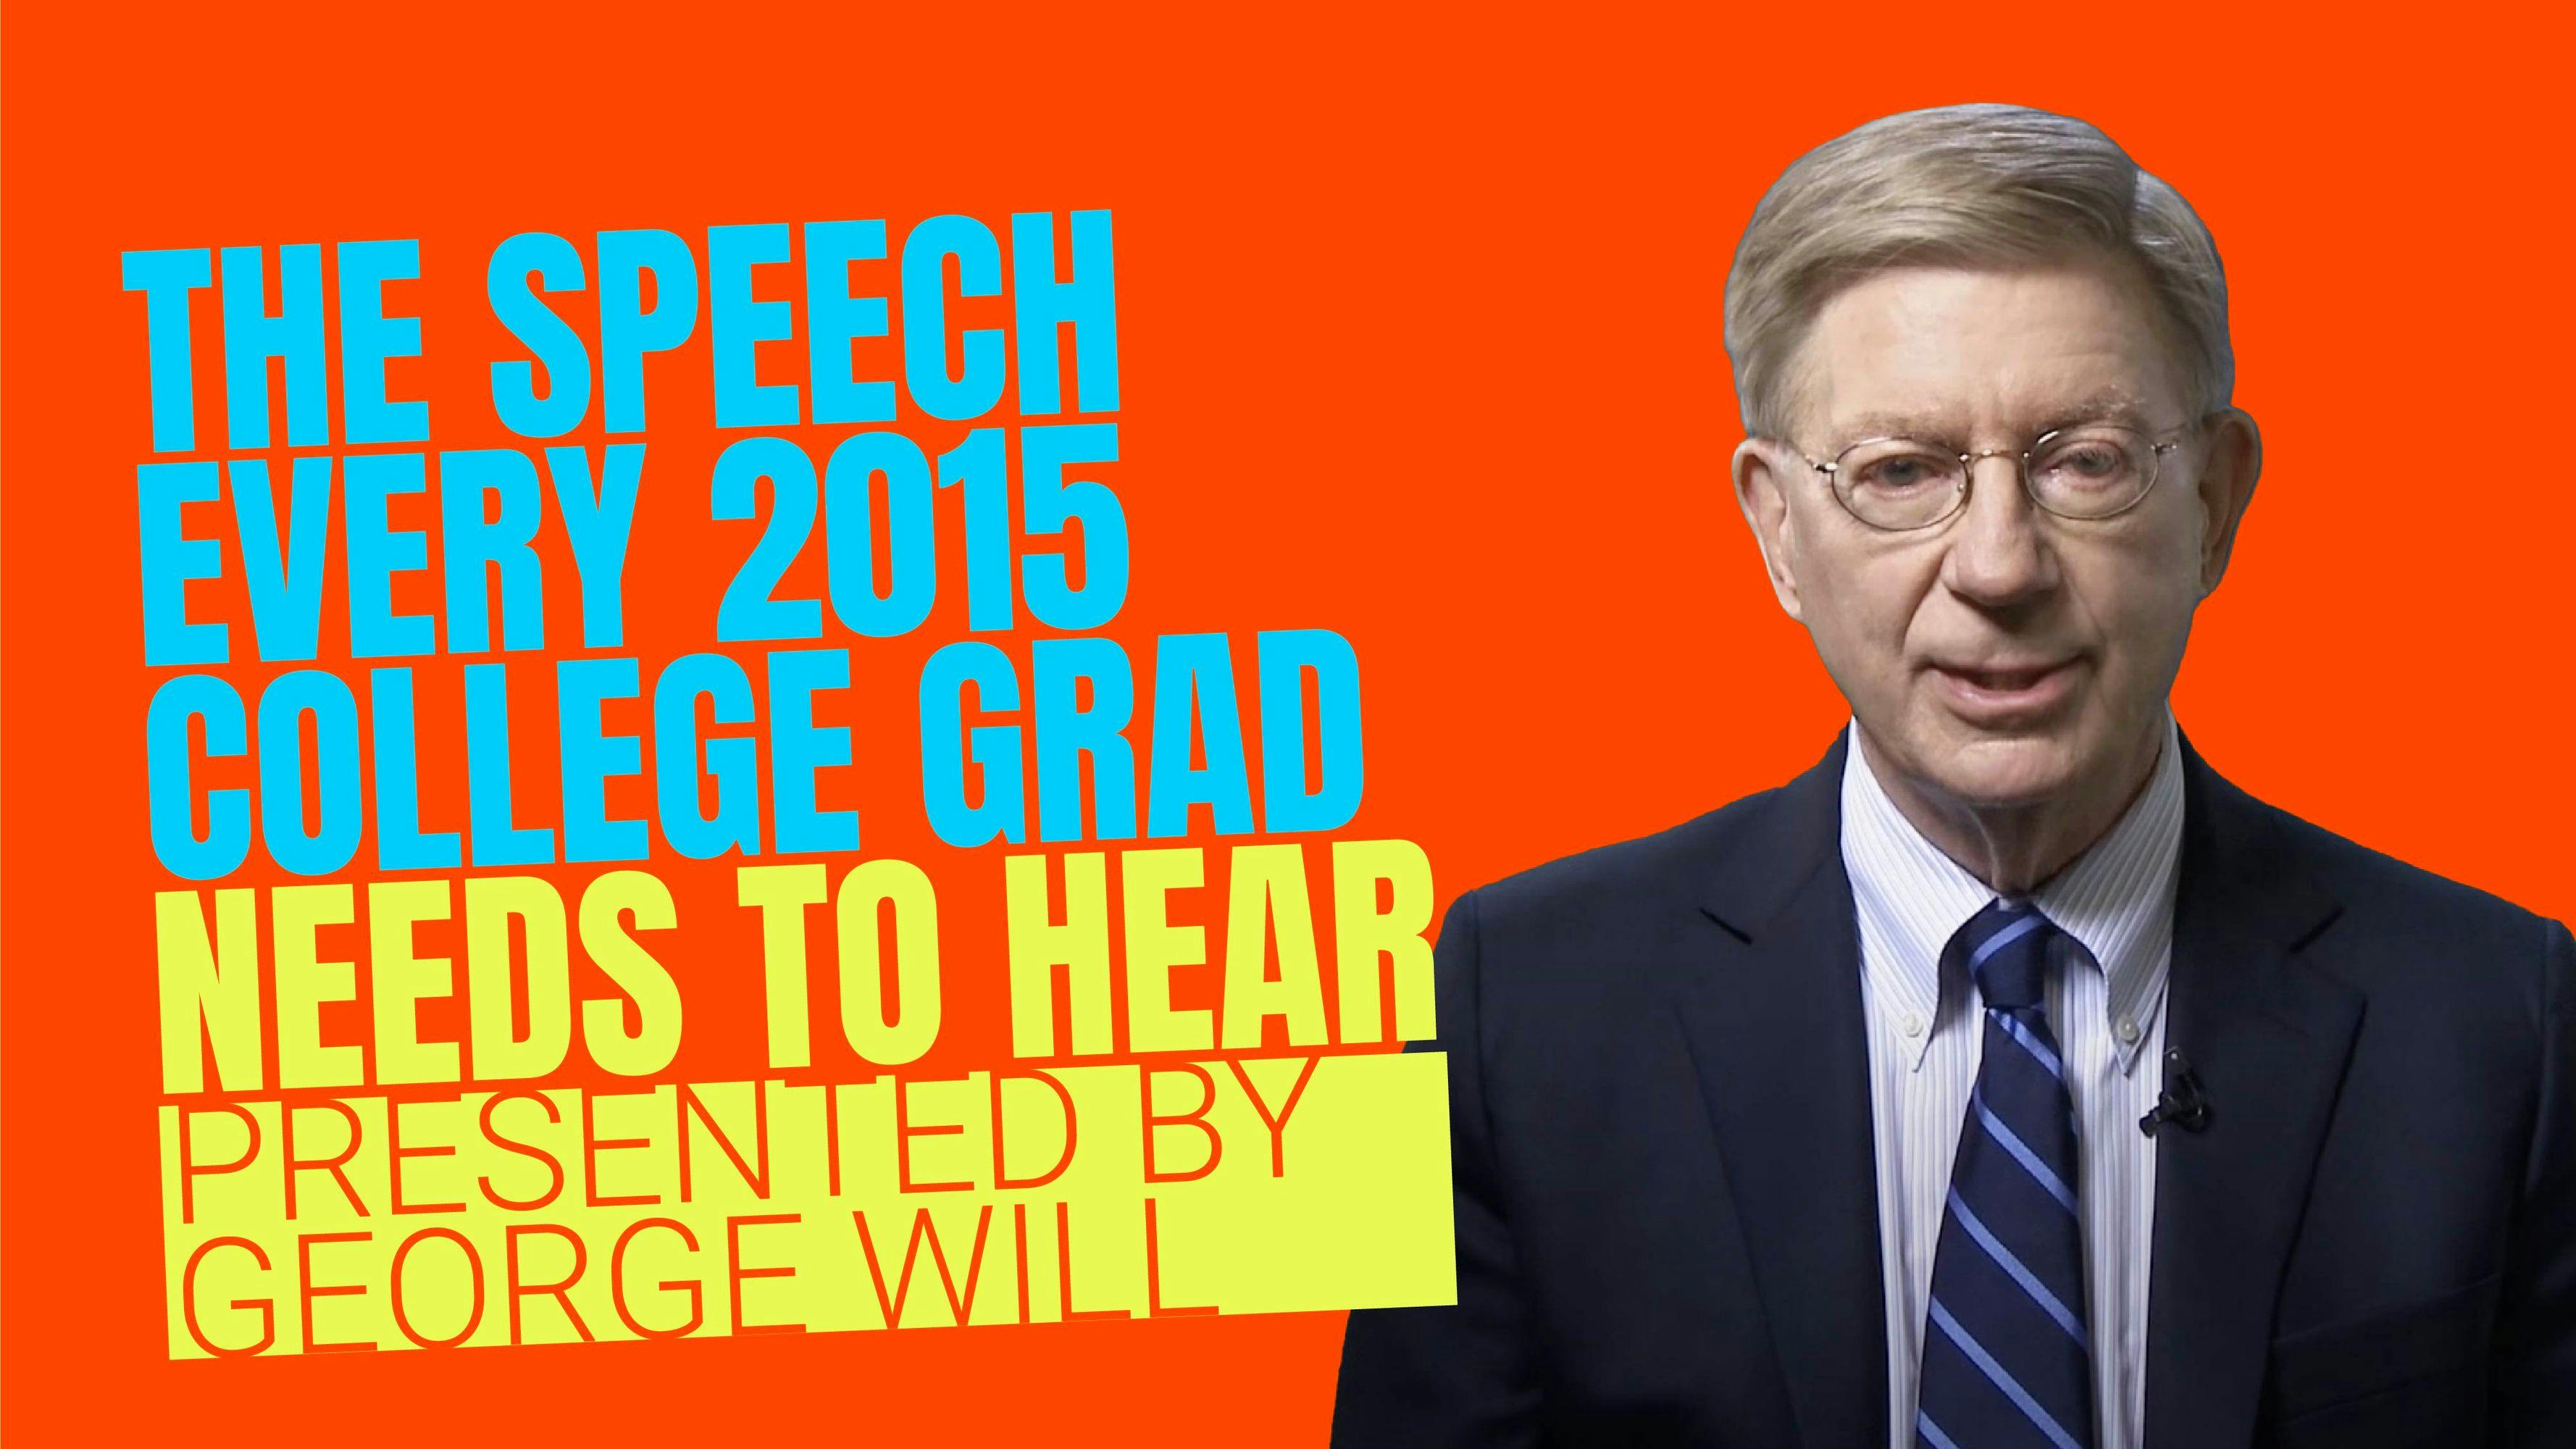 The Speech Every 2015 College Grad Needs to Hear